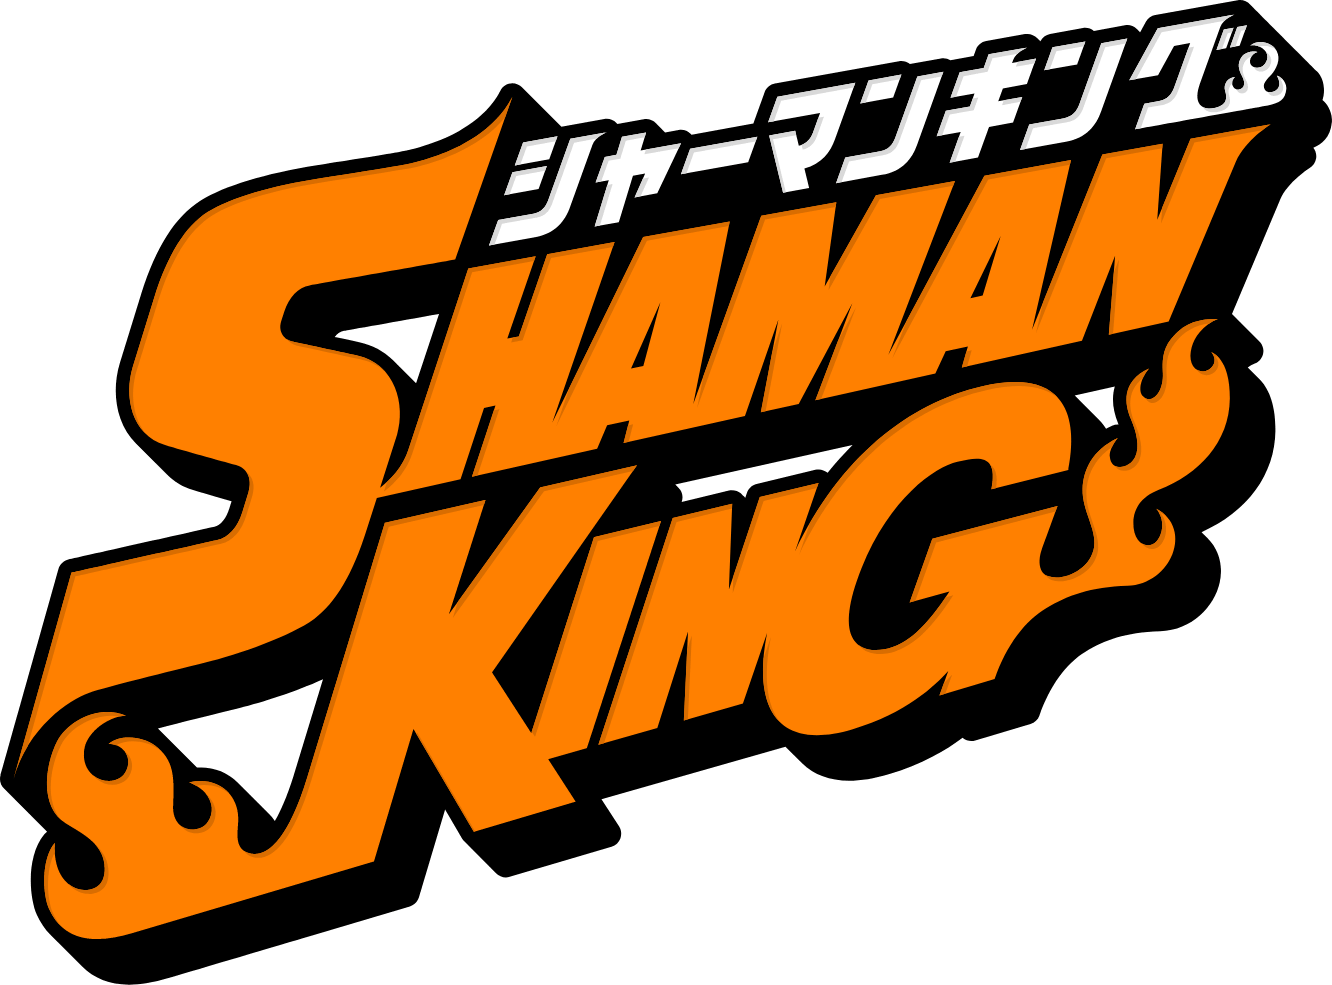 Shaman king netflix